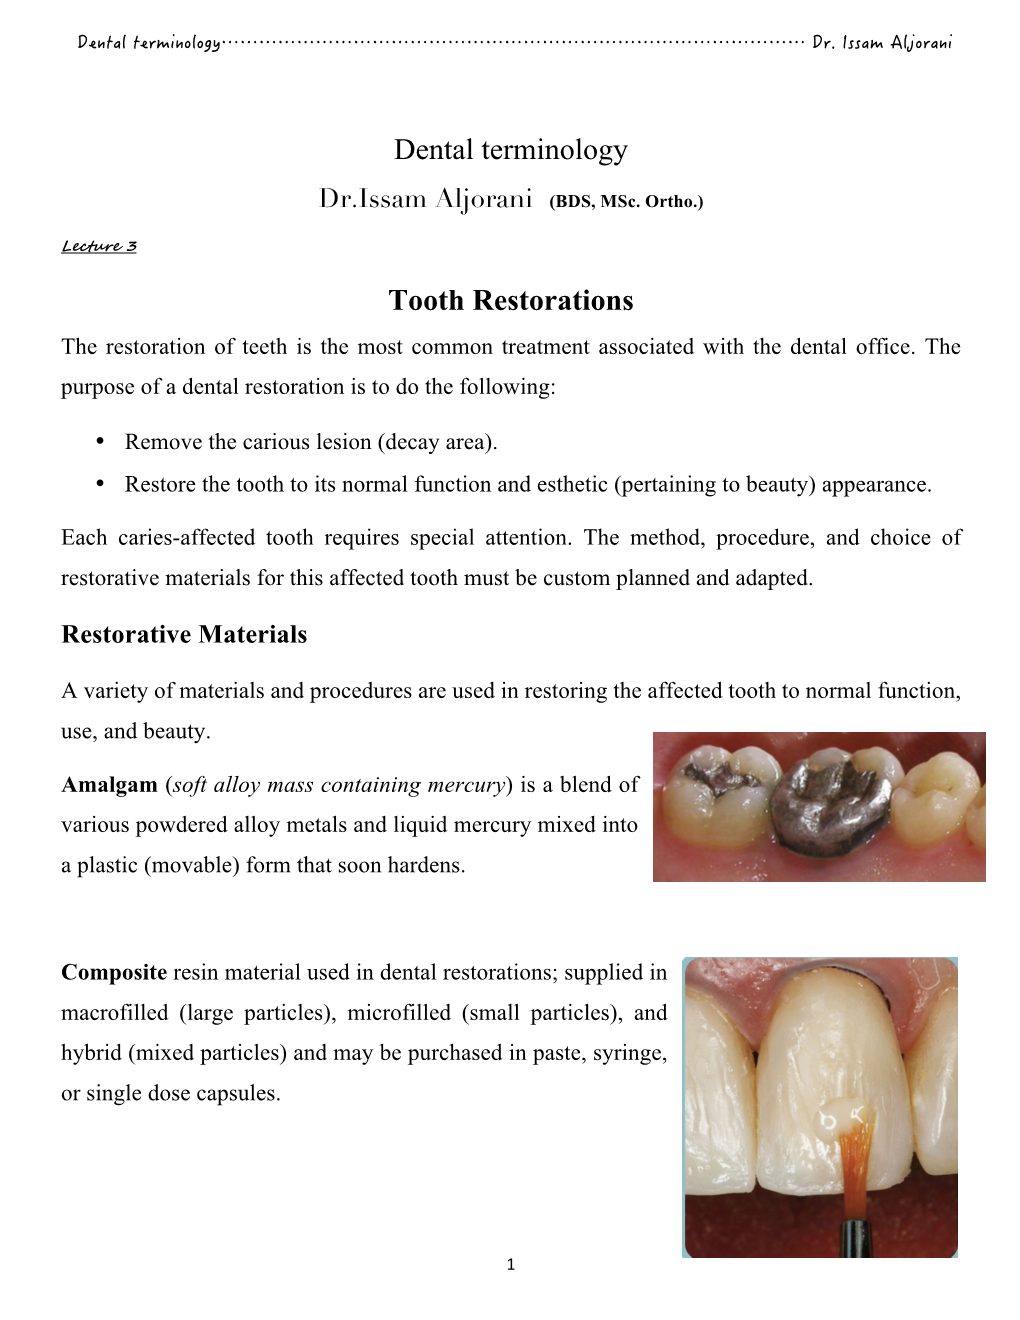 Dental Terminology Tooth Restorations